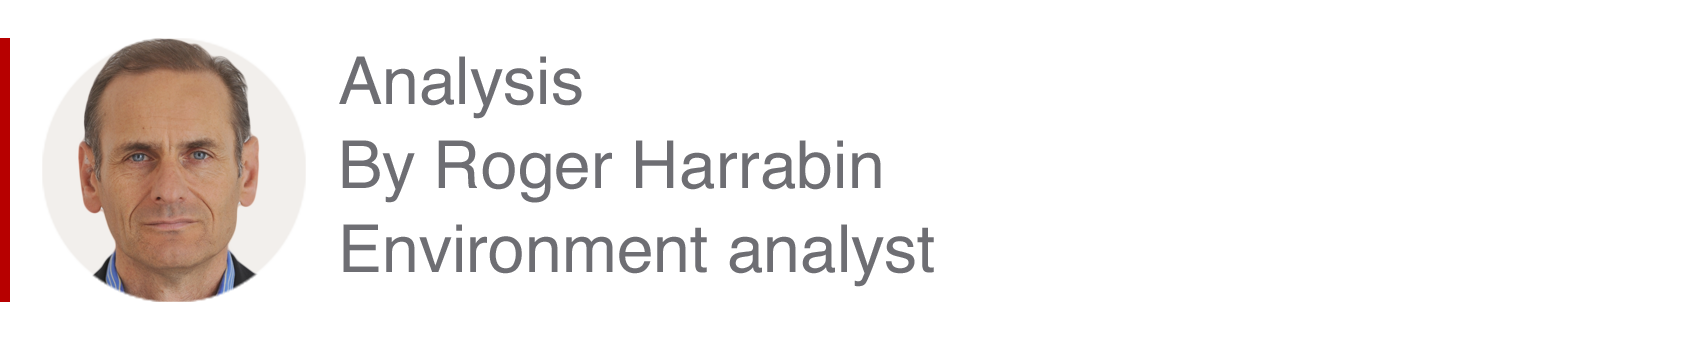 Analysis box by Roger Harrabin, Environment analyst